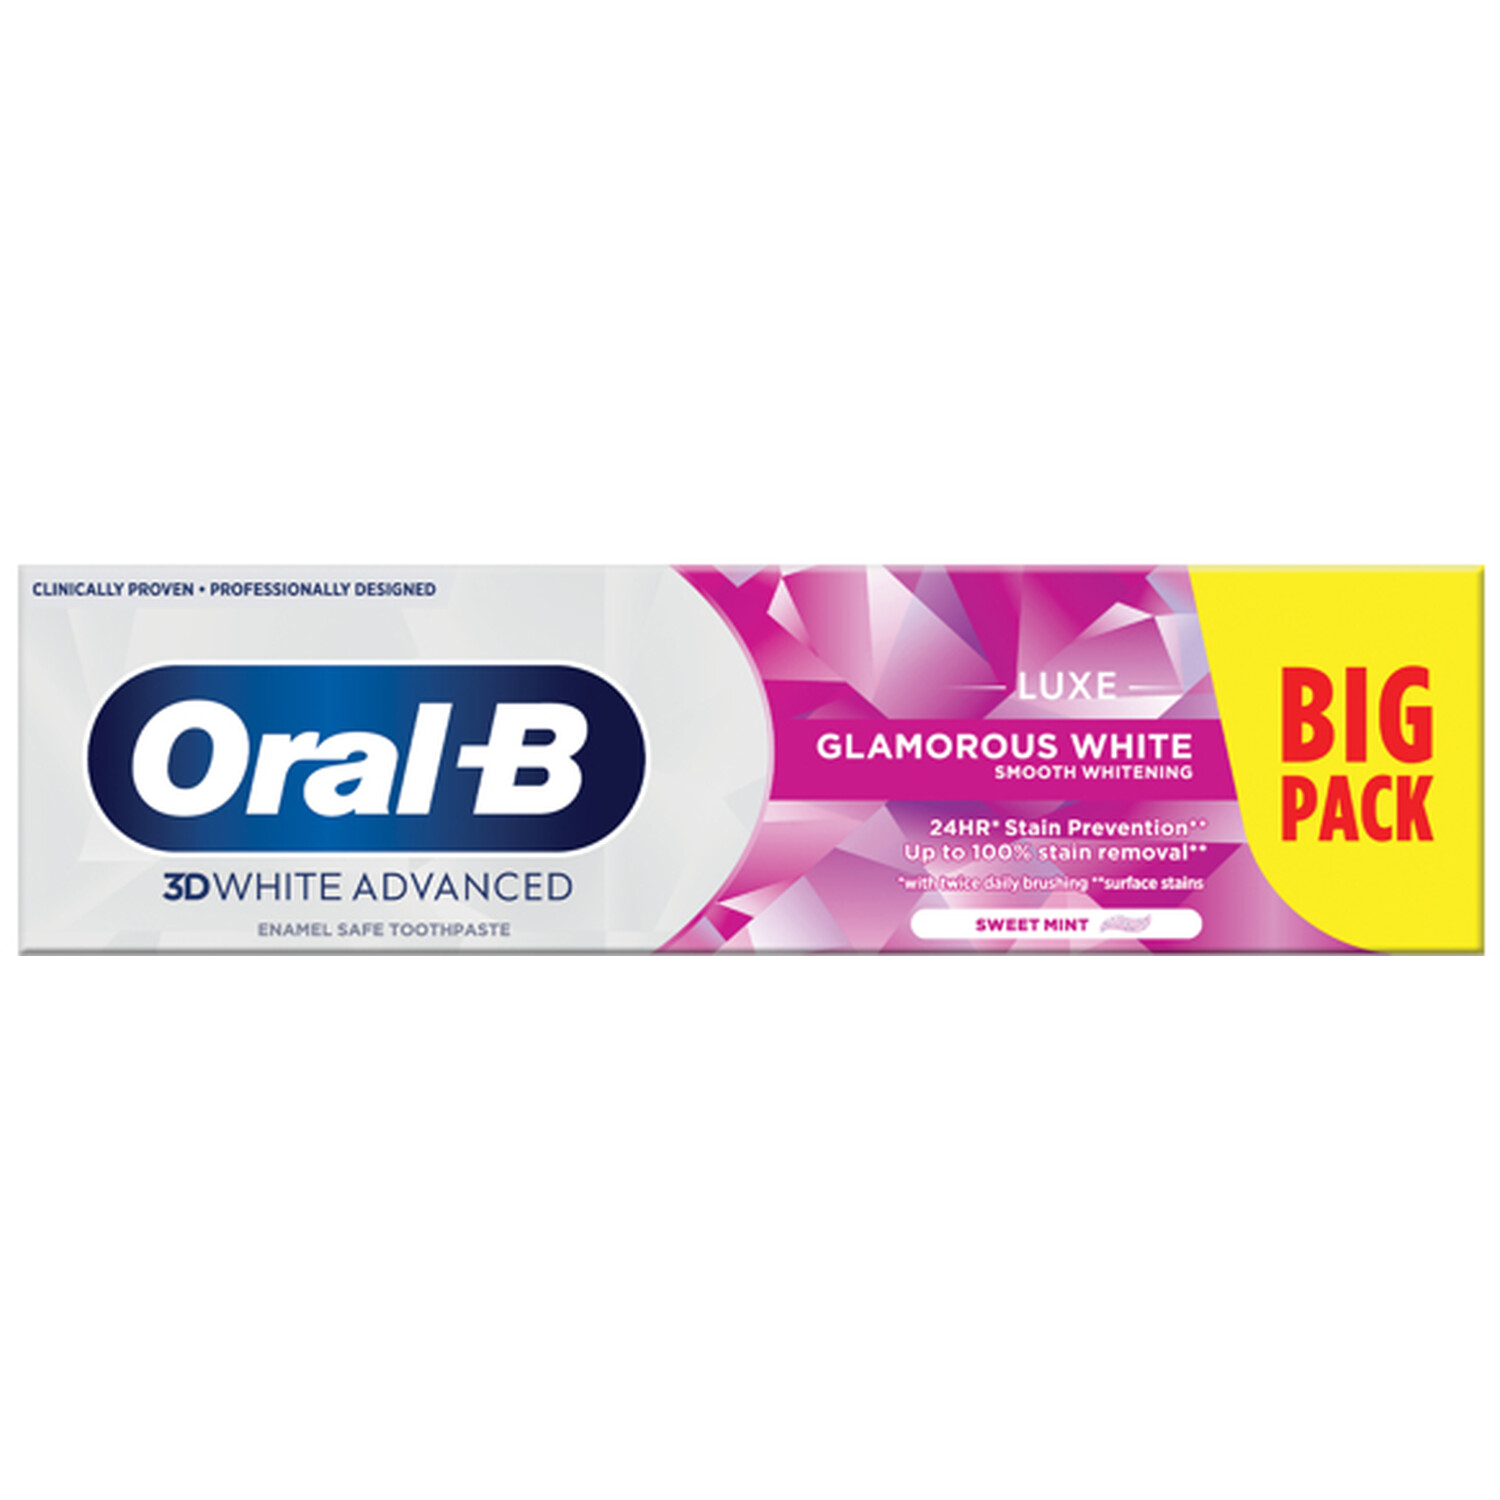 Oral-B Glamorous White Toothpaste - Pink Image